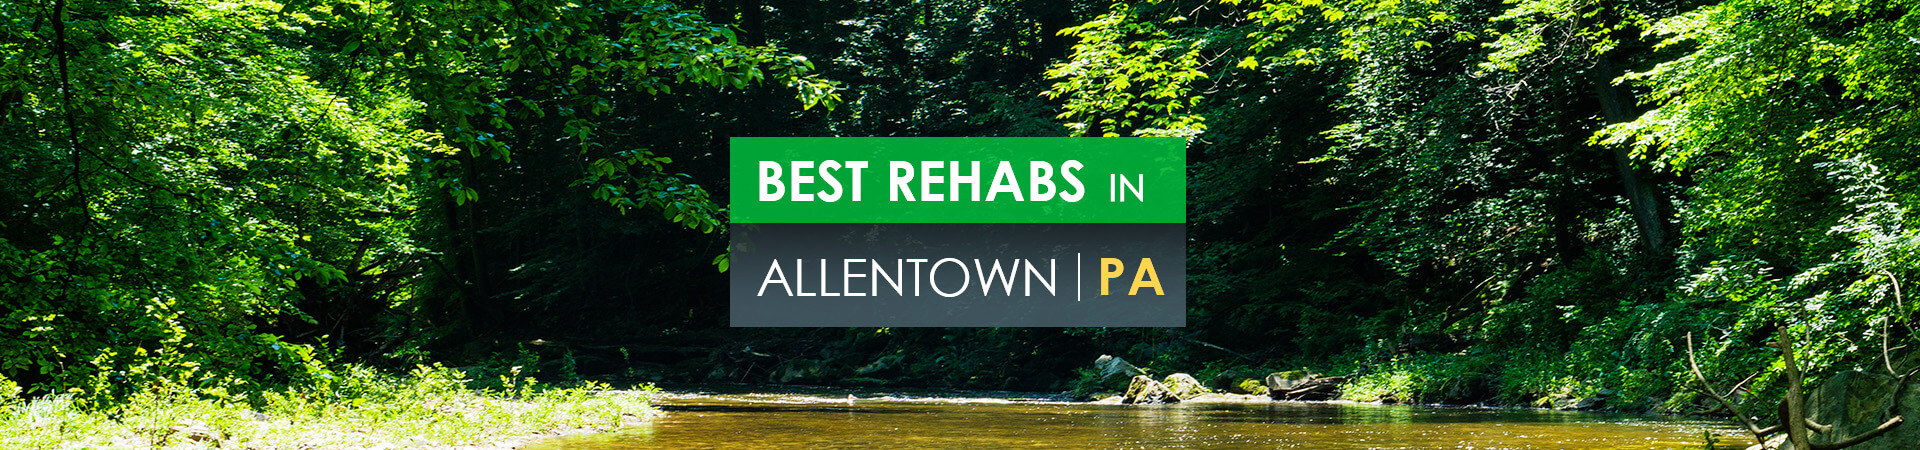 Best rehabs in Allentown, PA